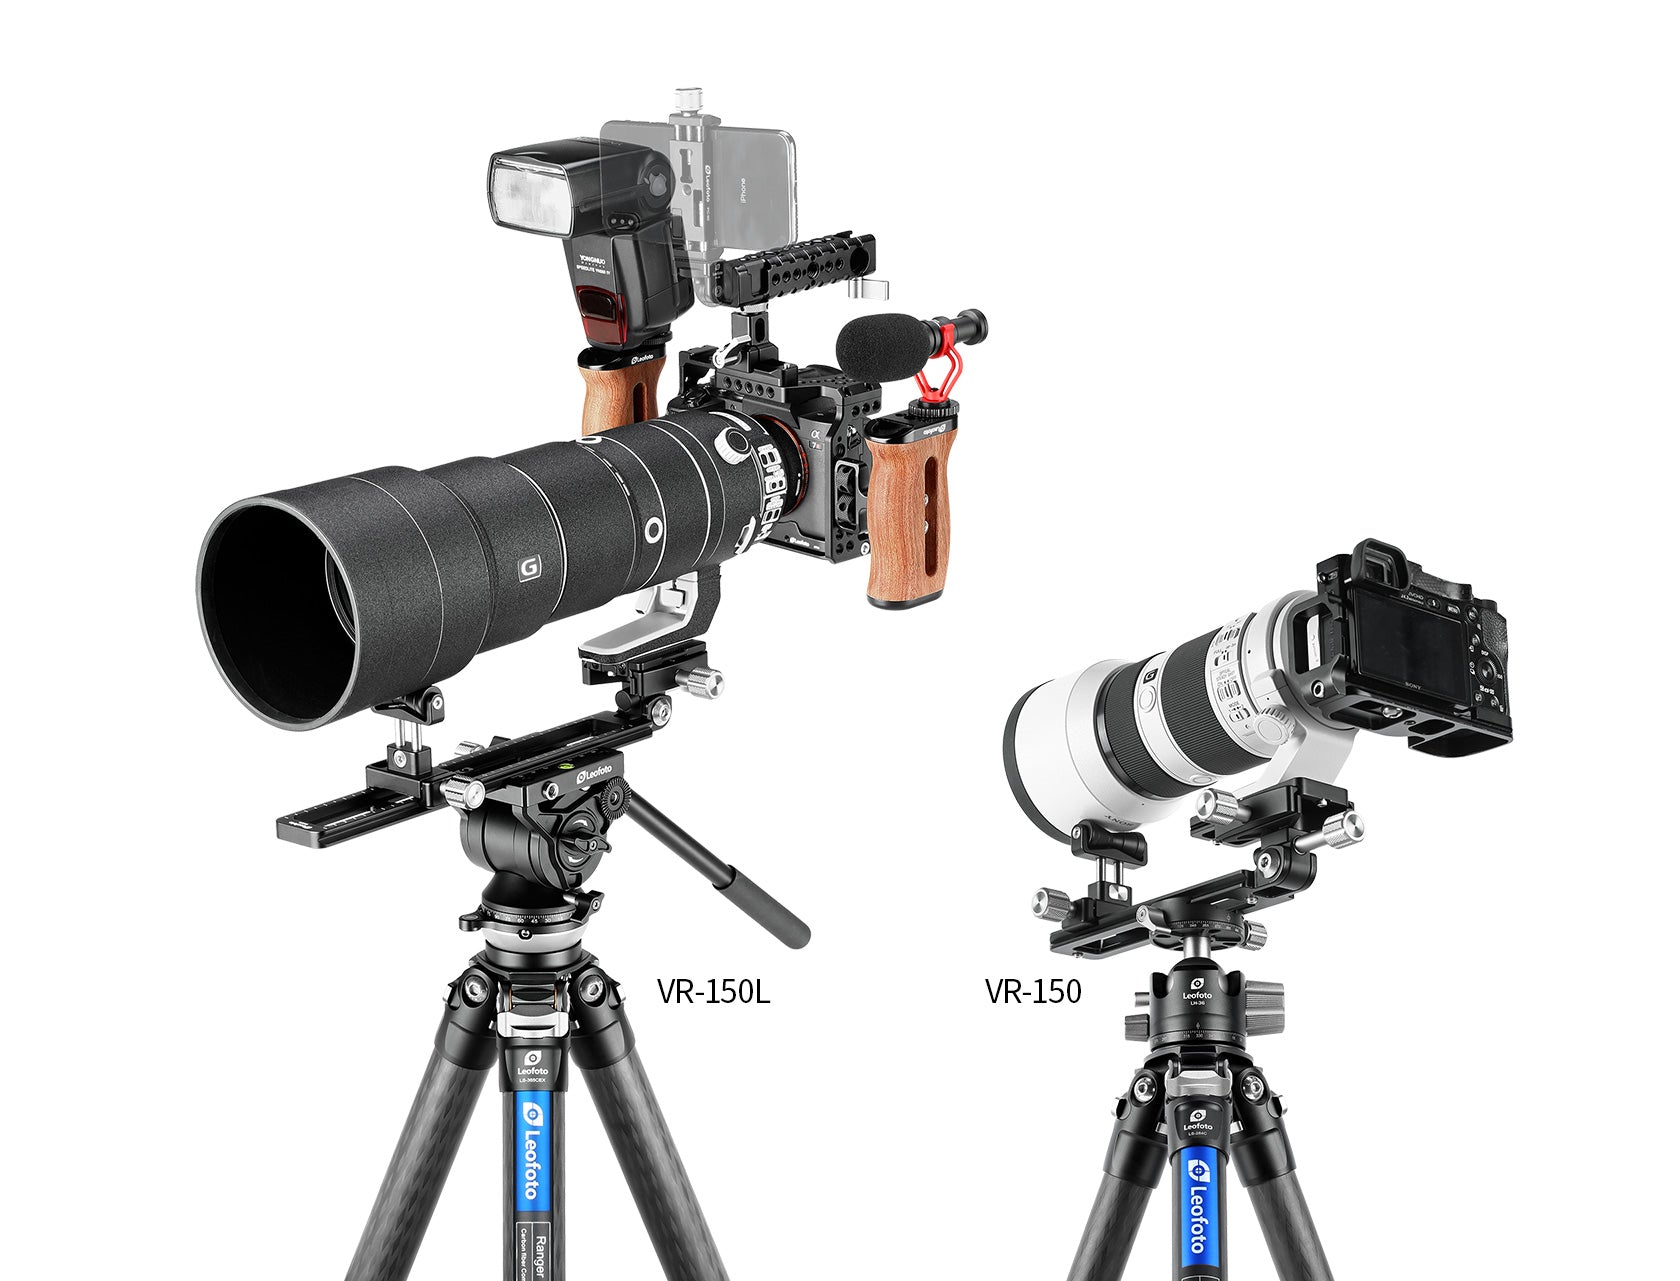 Leofoto VR-150 (Rail 171mm) / VR-150L (Rail 271mm) Dual Pivot Long Tele Lens Support for Arca